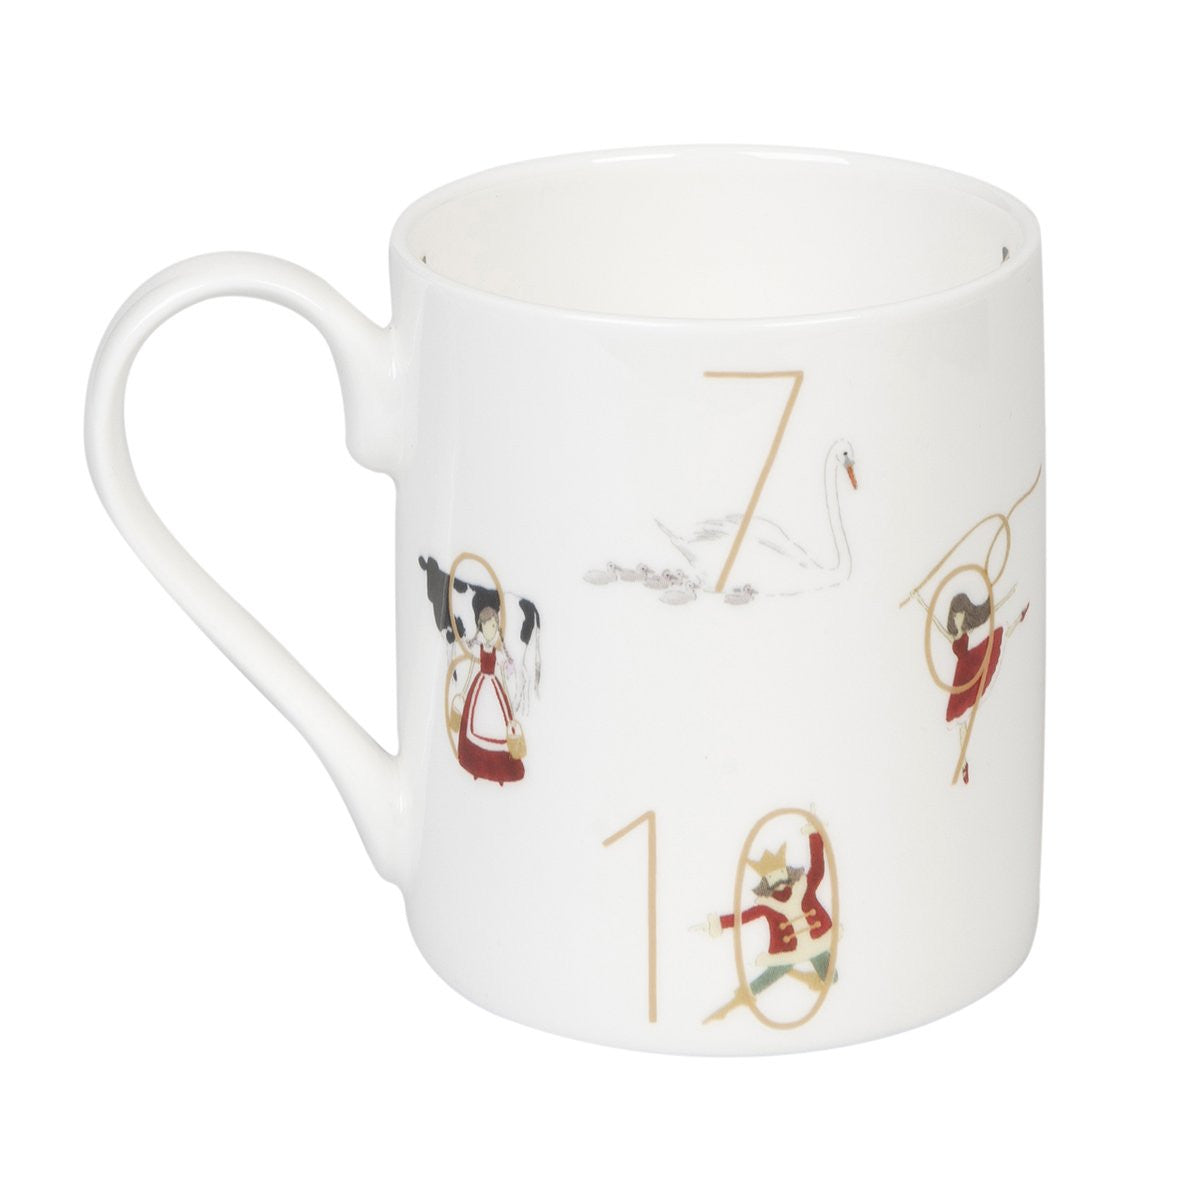 Sophie Allport 12 Days of Christmas Mug boxed